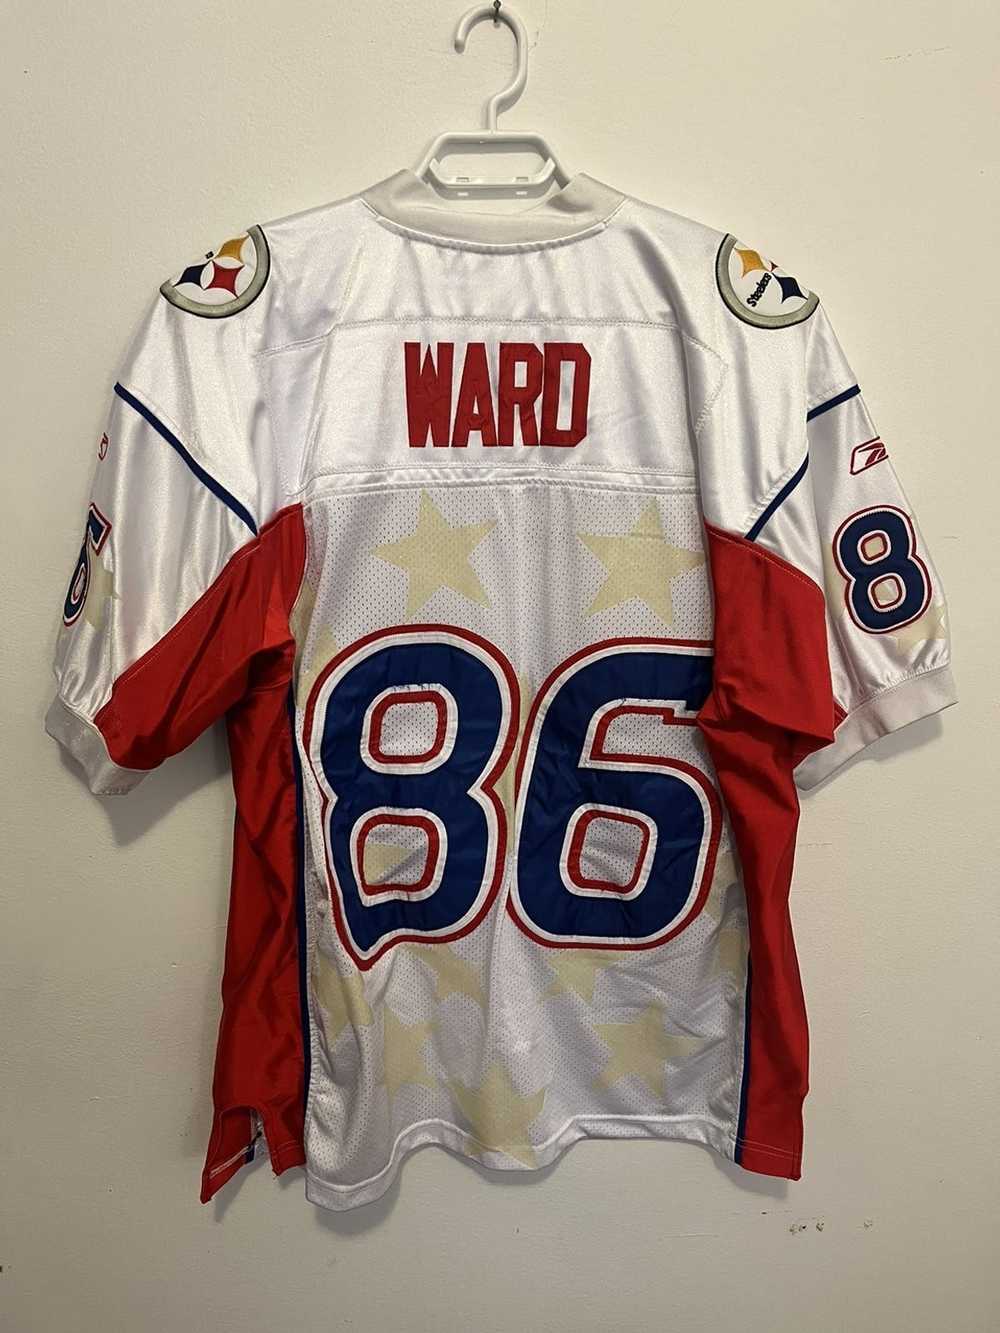 Reebok Authentic 2004 Hines Ward Pro Bowl Jersey - image 2